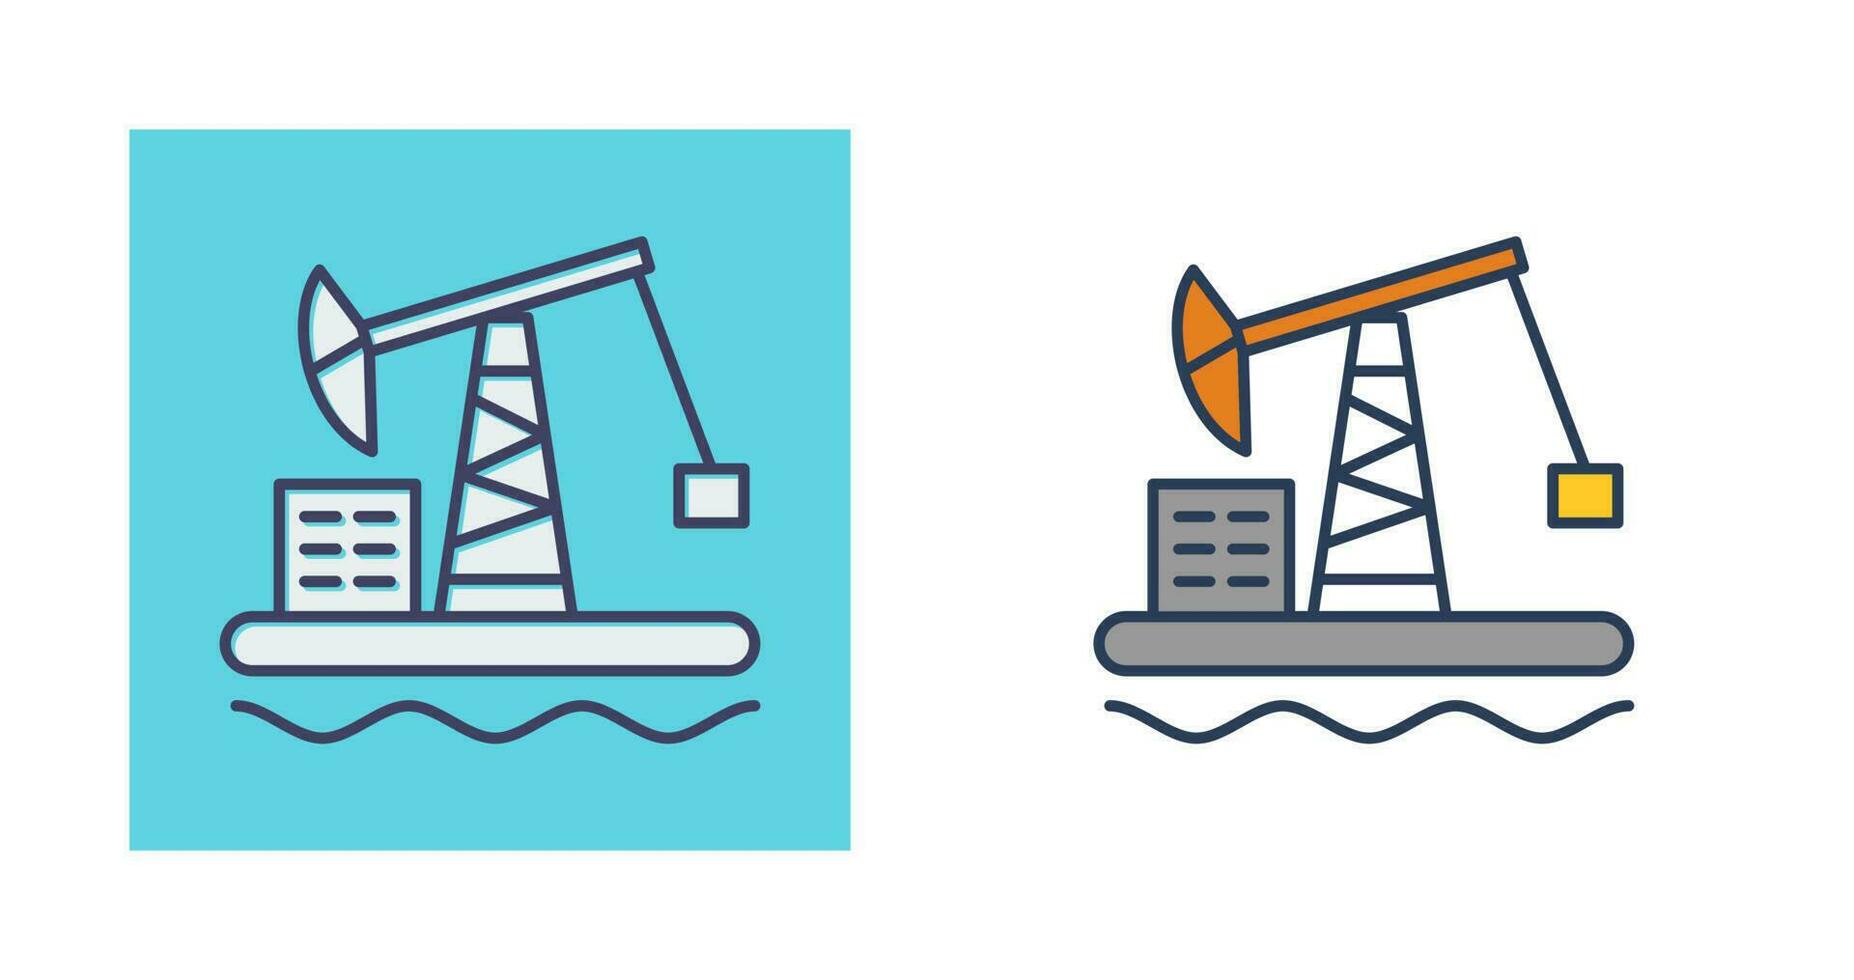 ícone de vetor de plataforma de petróleo